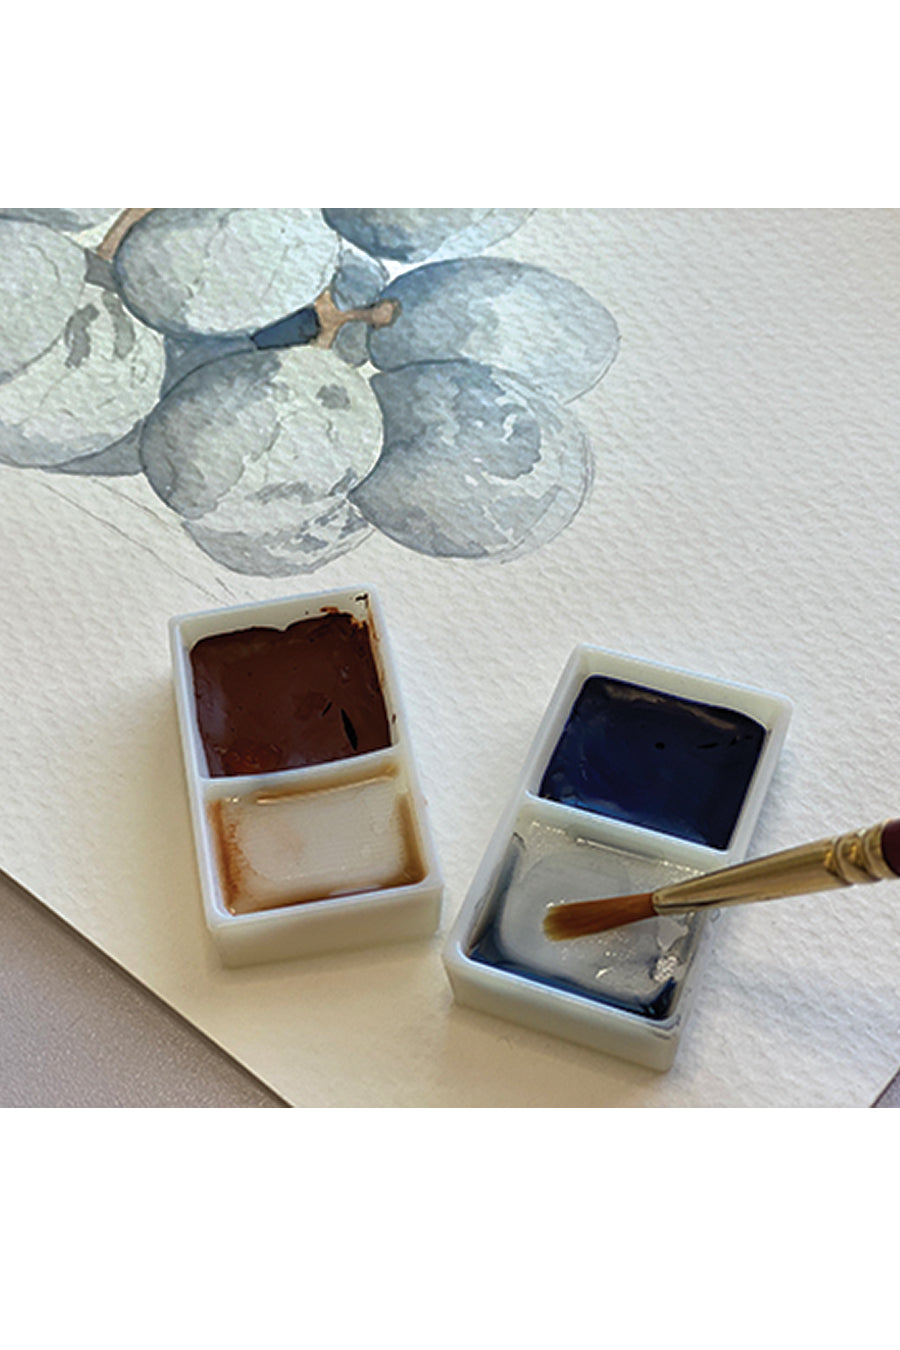 Grumbacher Japanese Watercolor Sets – Chartpak Factory Store